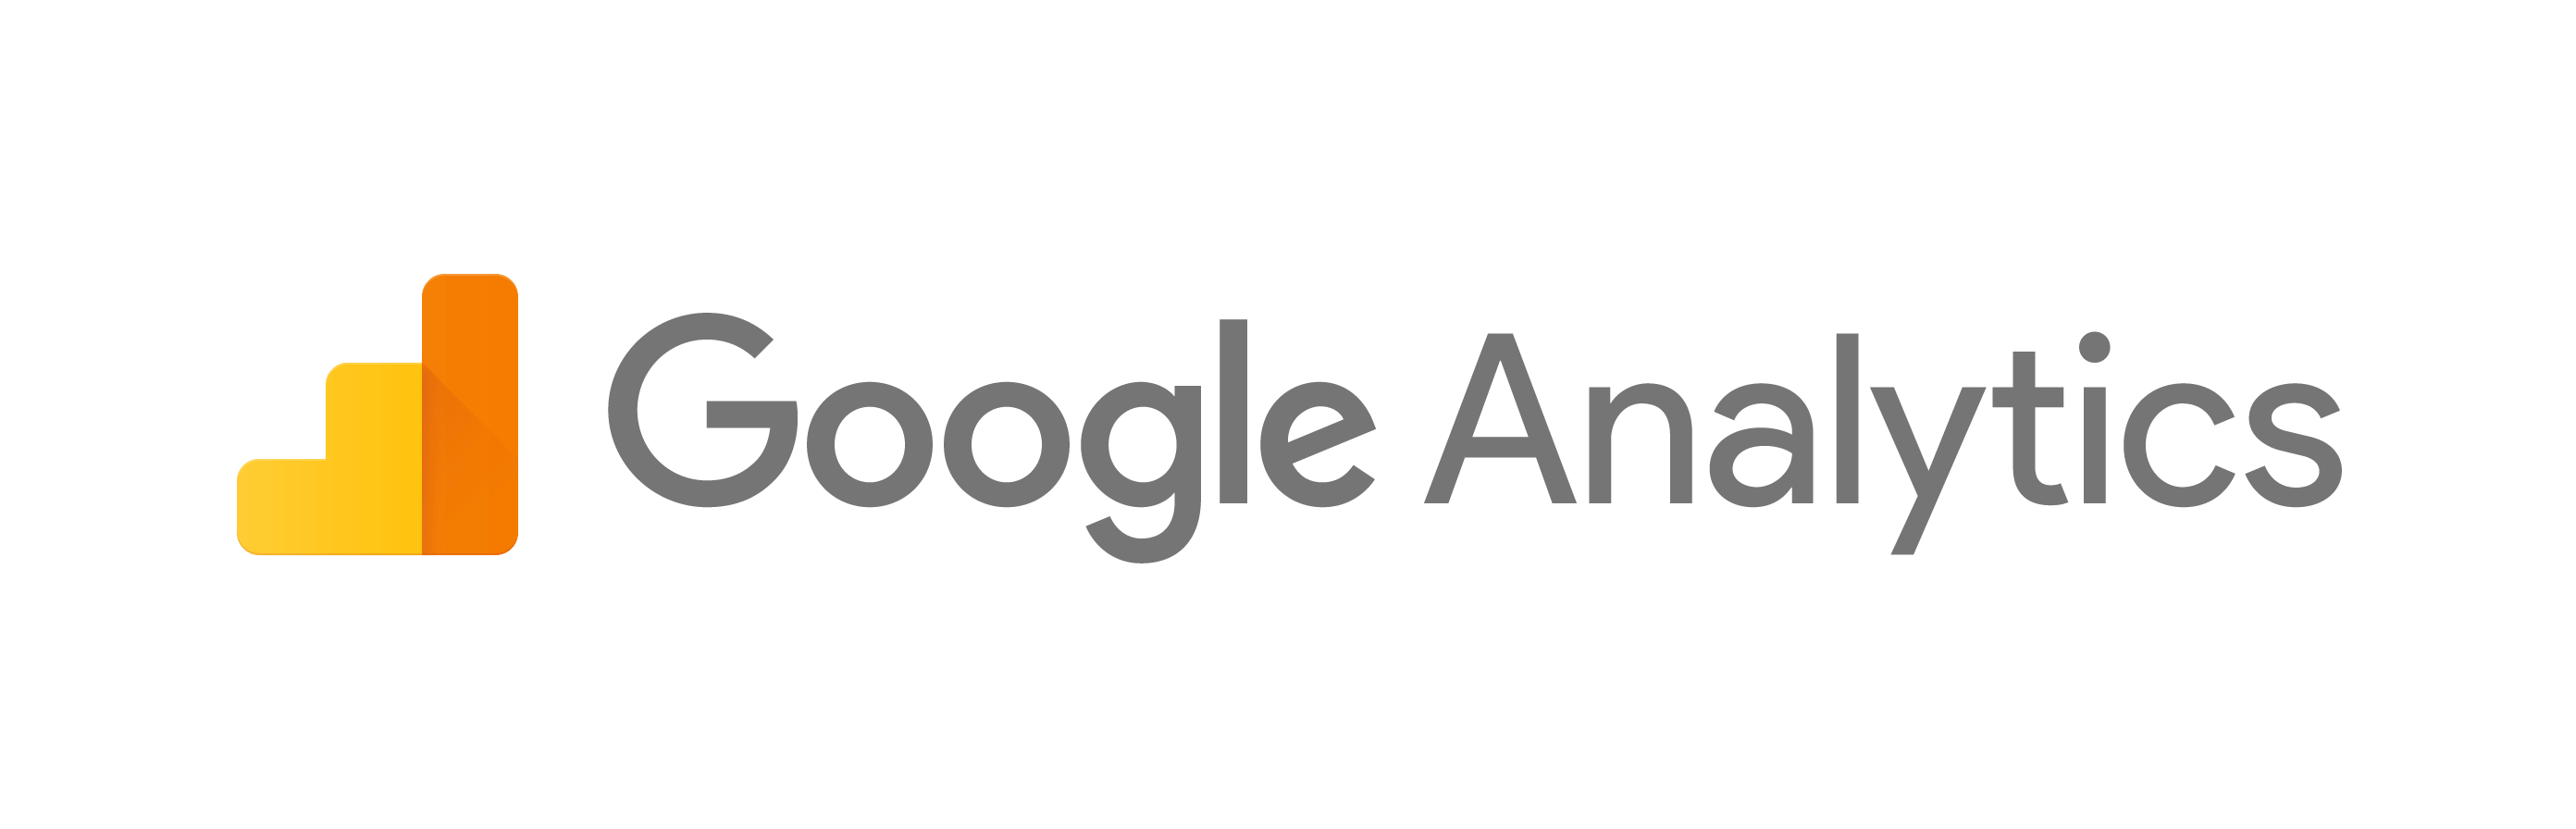 google analytics for business logo